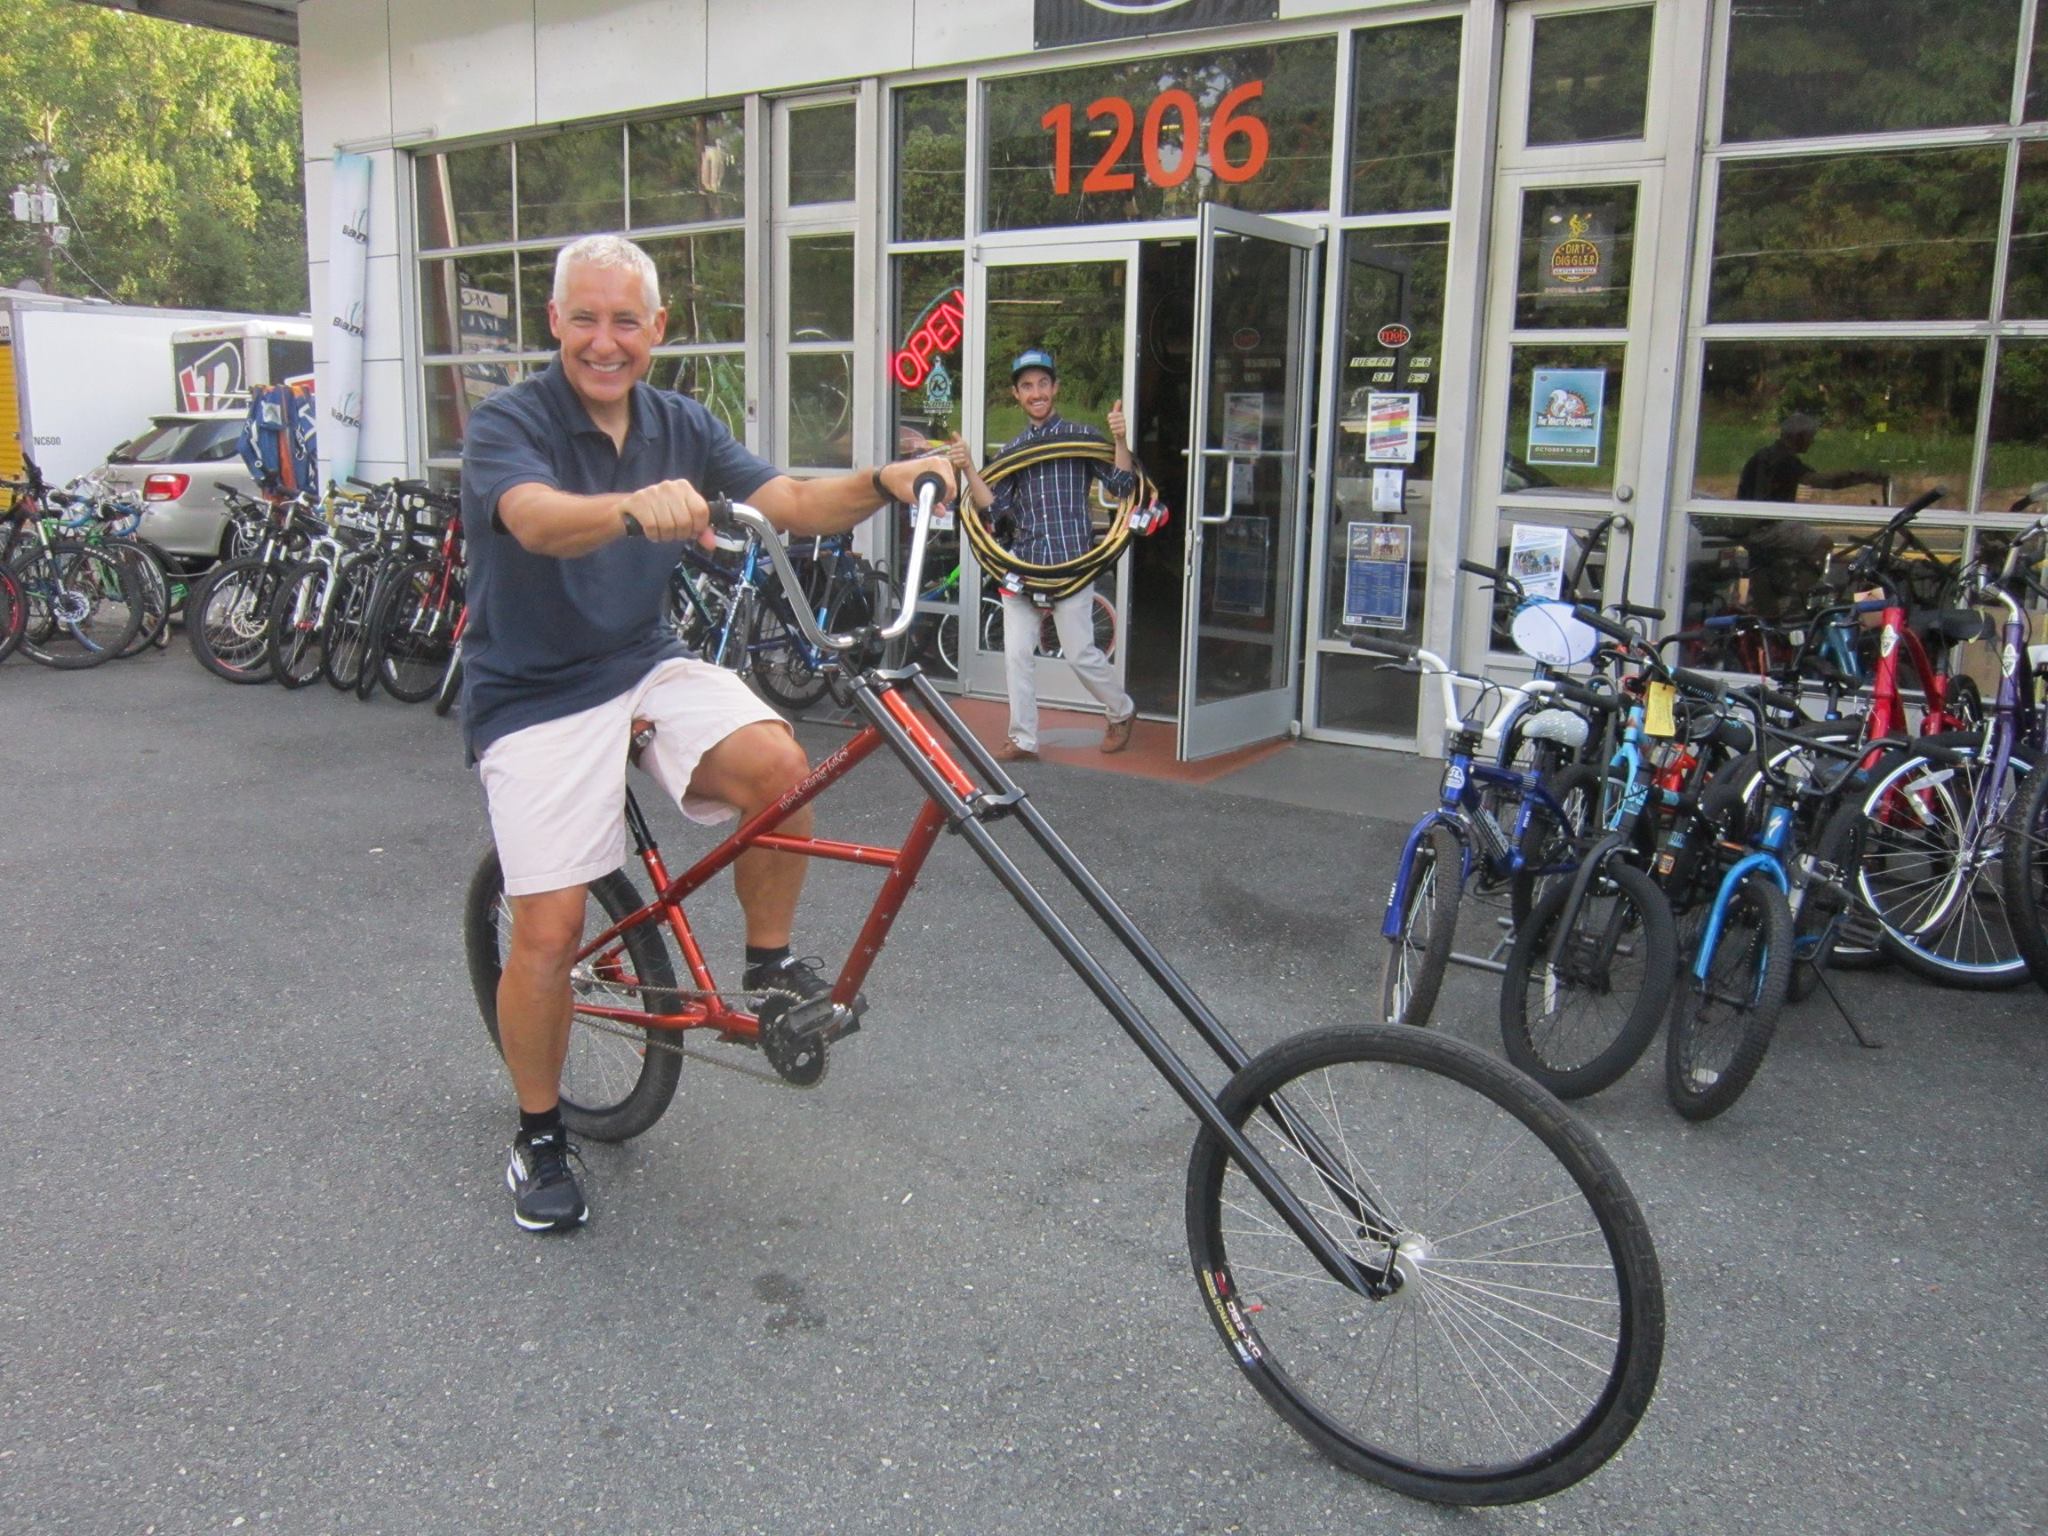 Gordon on the Mock Orange Bikes Chopper. He enjoyed riding this cool bicycle around the parking lot. Looking Good!